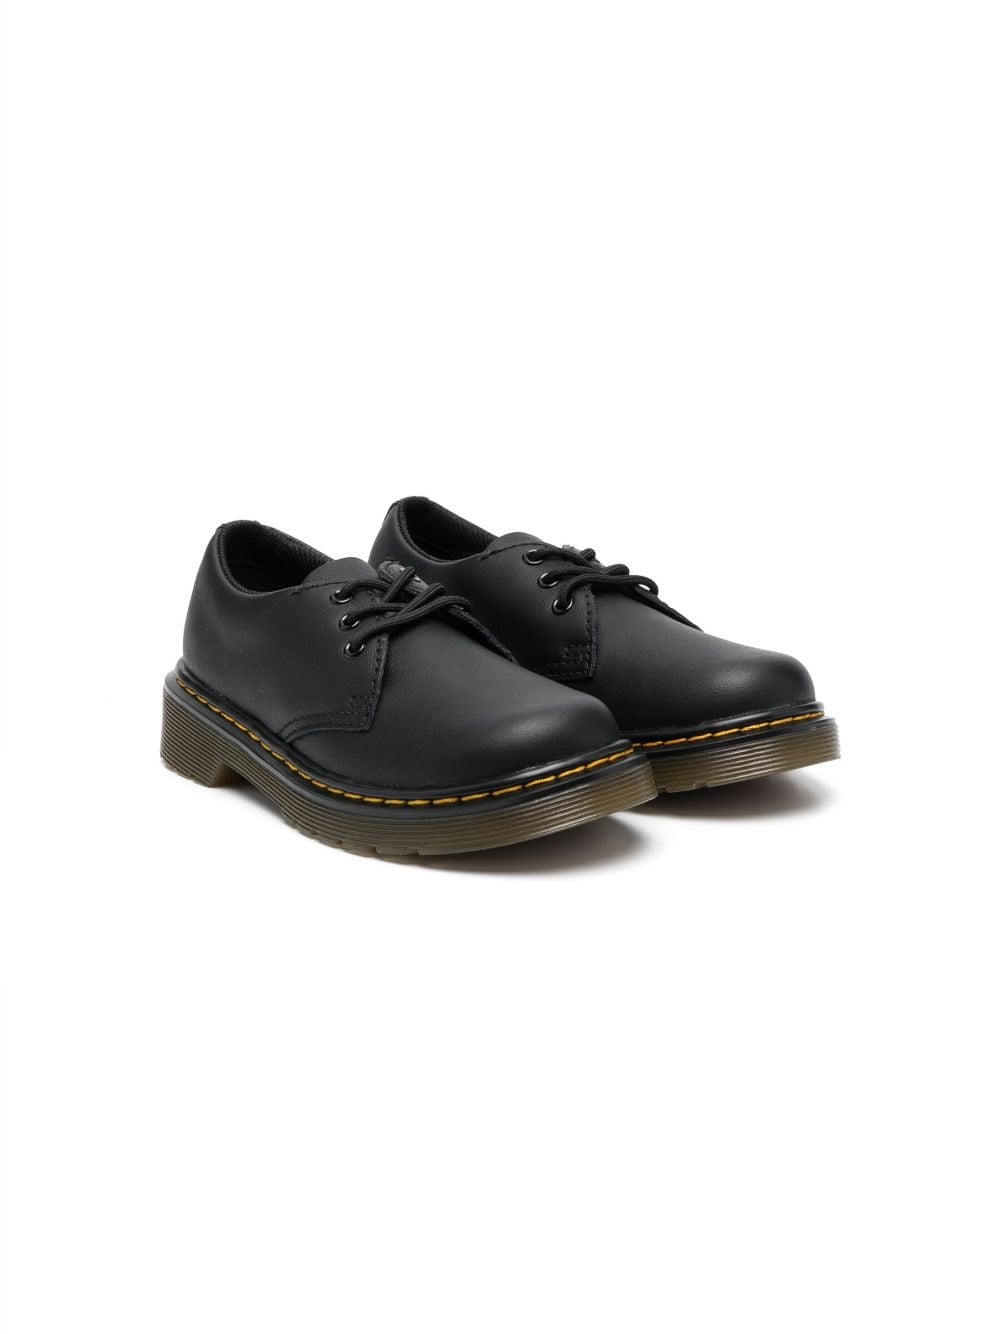 Image 1 of Dr. Martens Kids 1461 leather Derby shoes